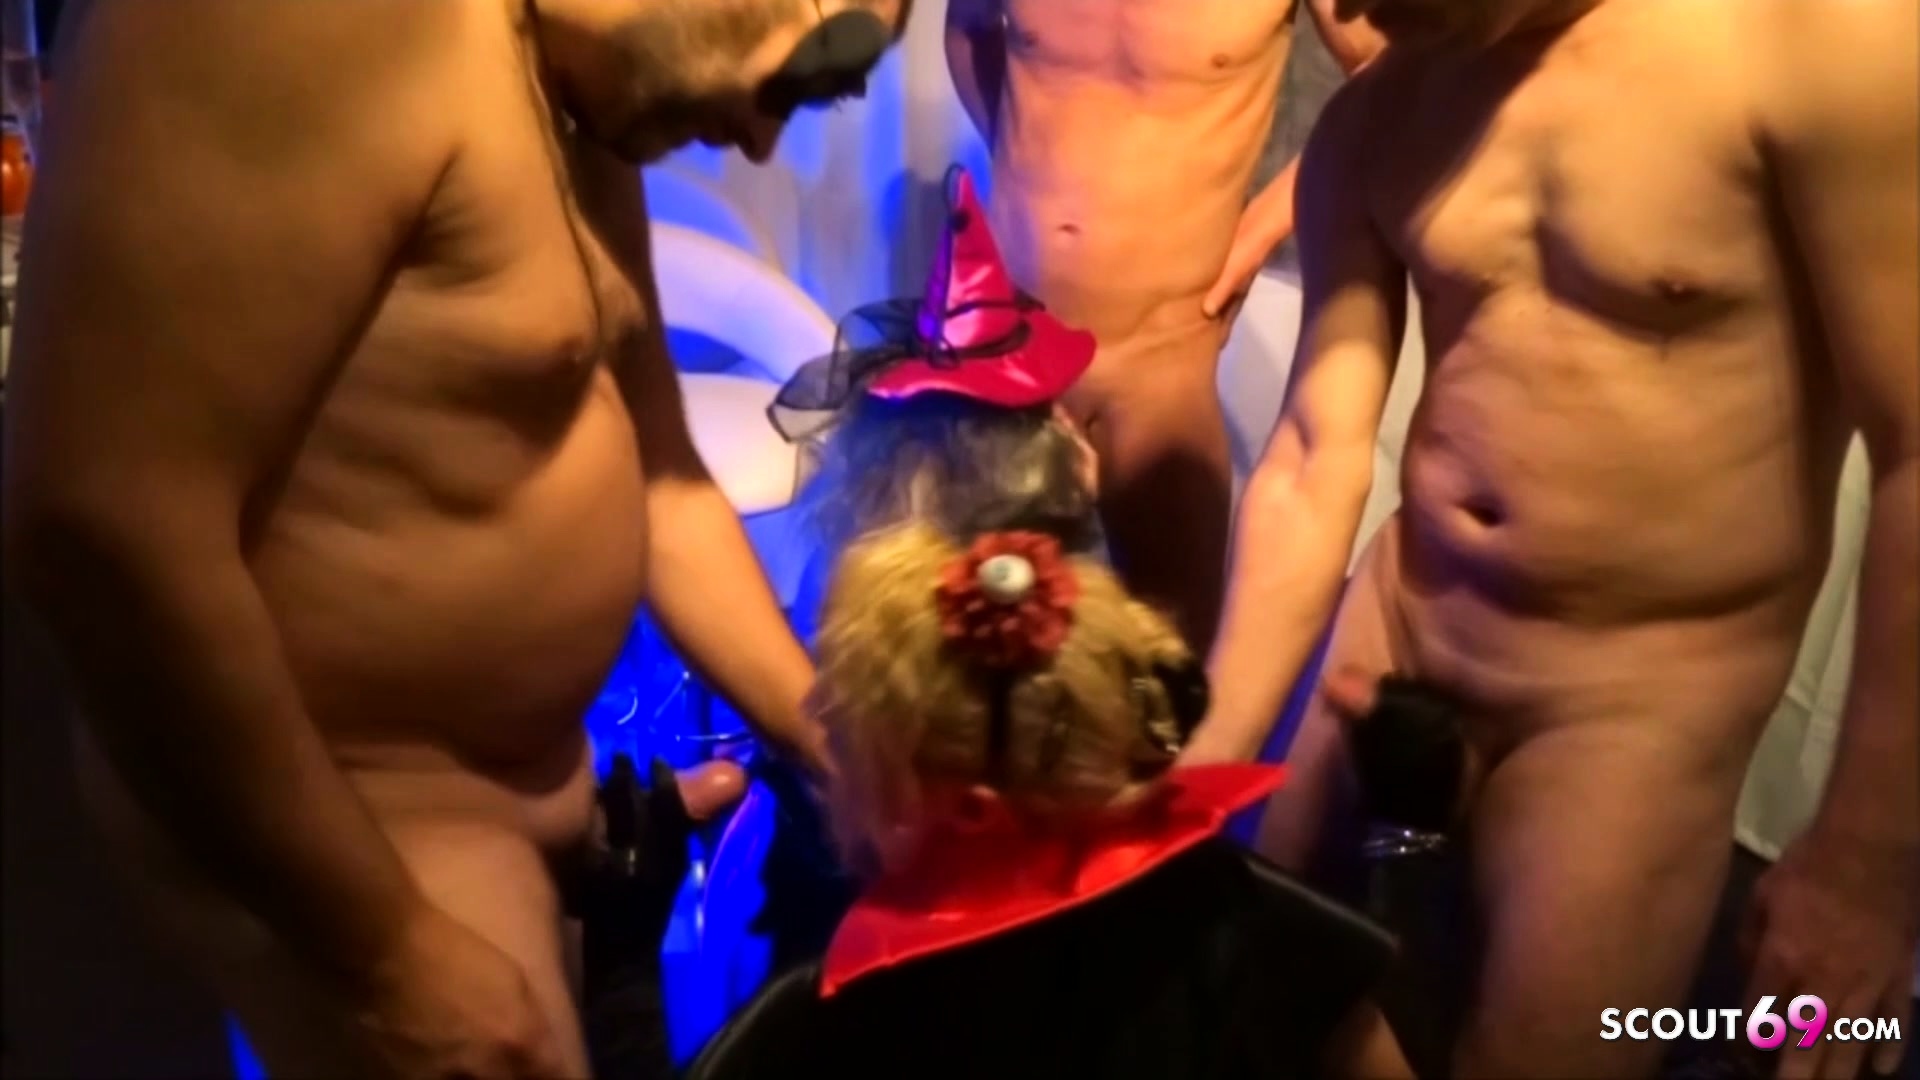 holloween sex party video homemade